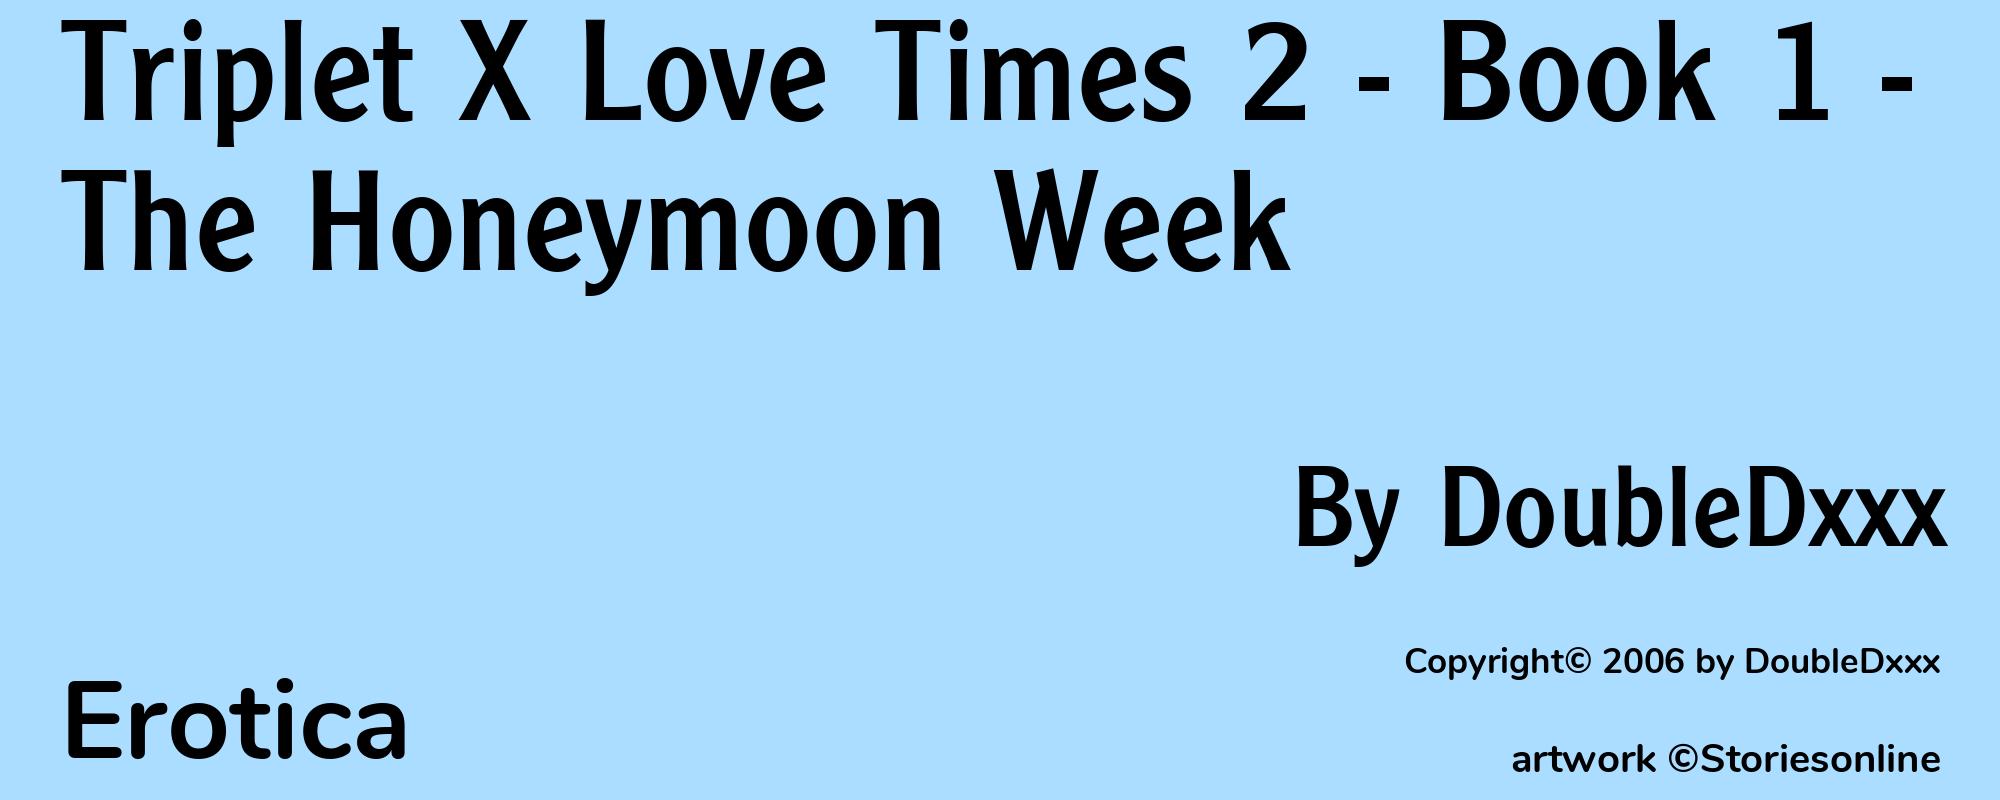 Triplet X Love Times 2 - Book 1 - The Honeymoon Week - Cover